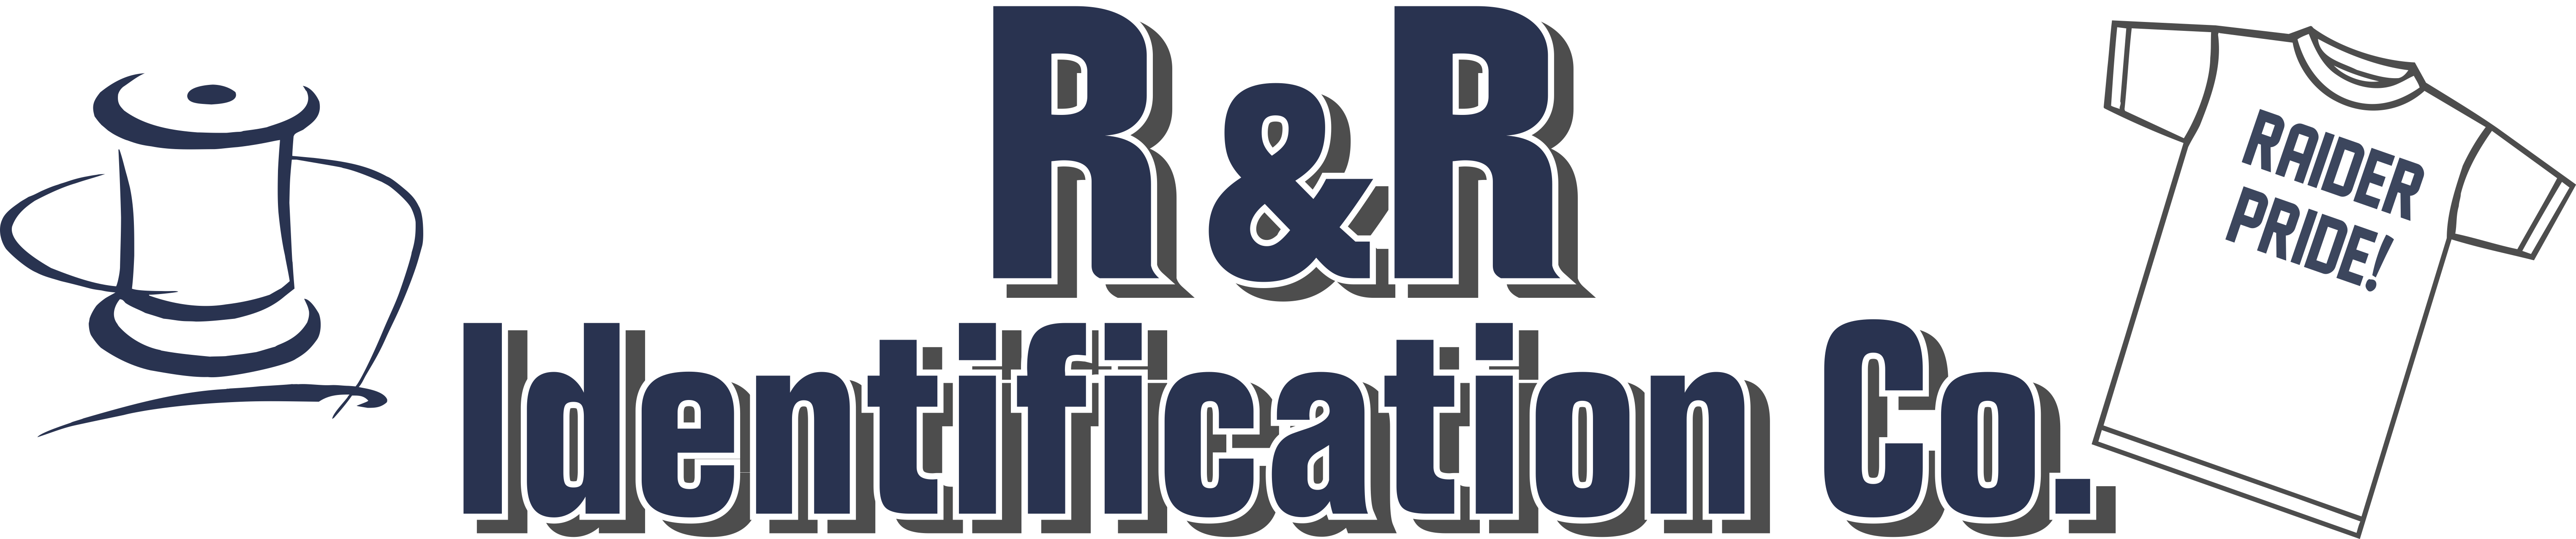 R & R Identification Co's Logo